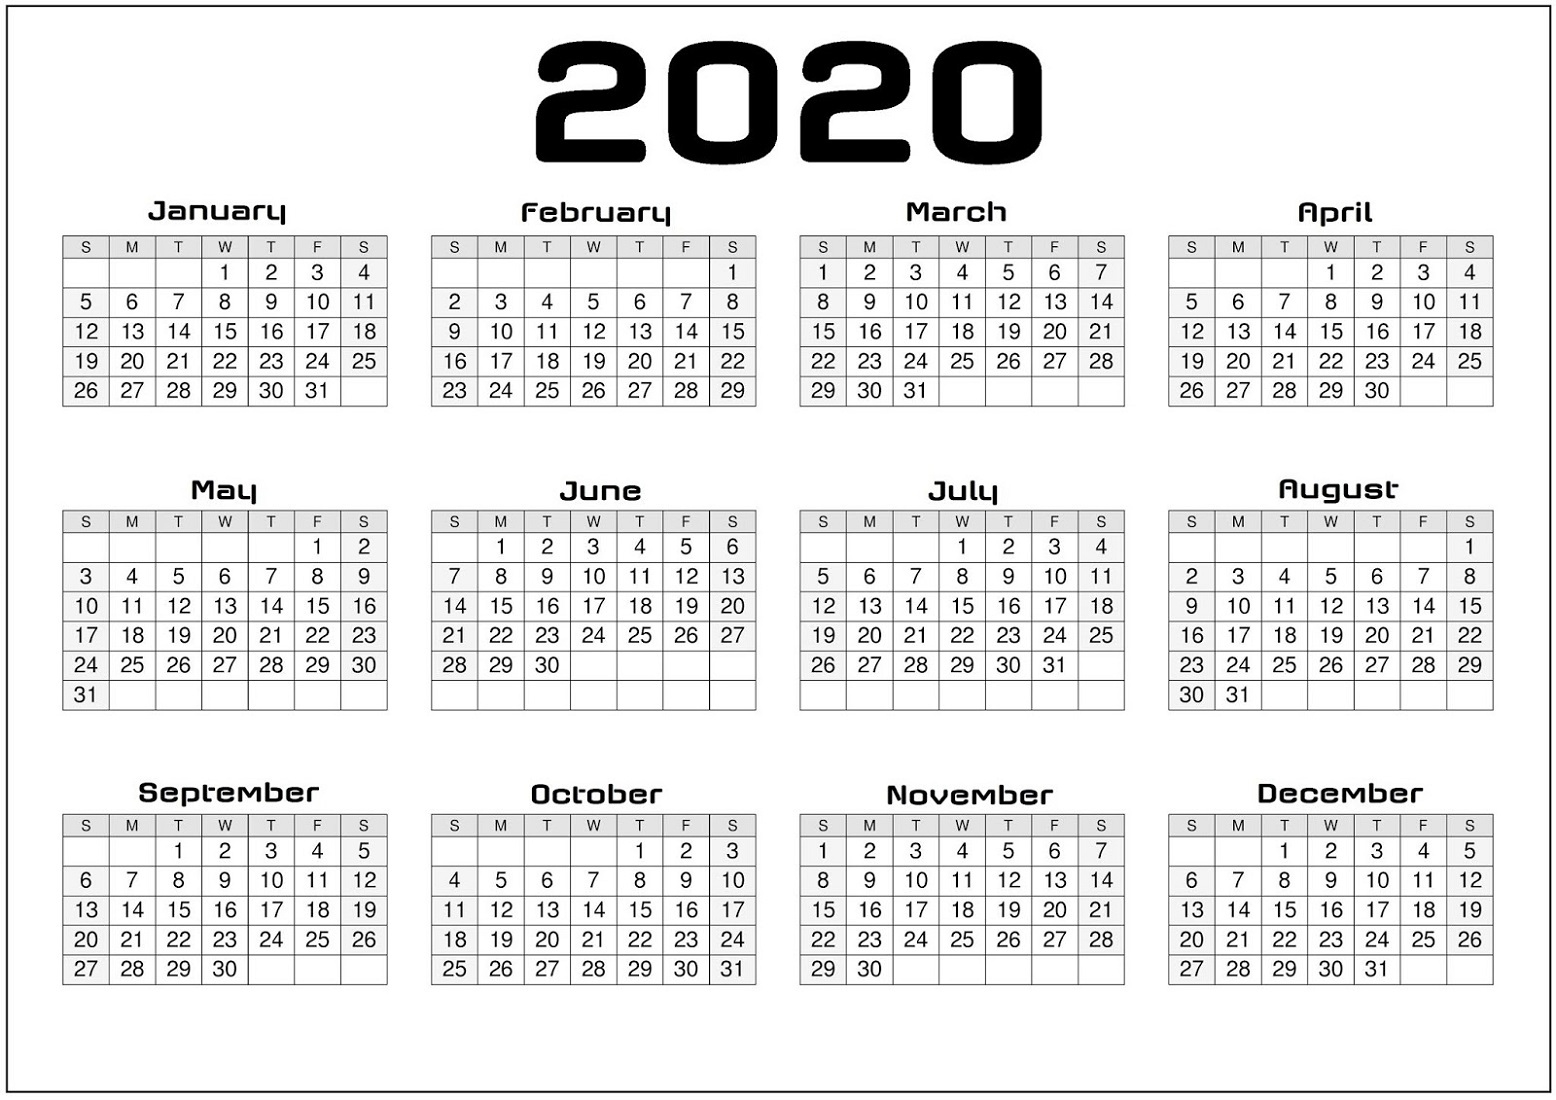 Yearly Calendar 2020 Printable Free For Agenda | Calendar 2020 Calendar Template Calendarlabs.com